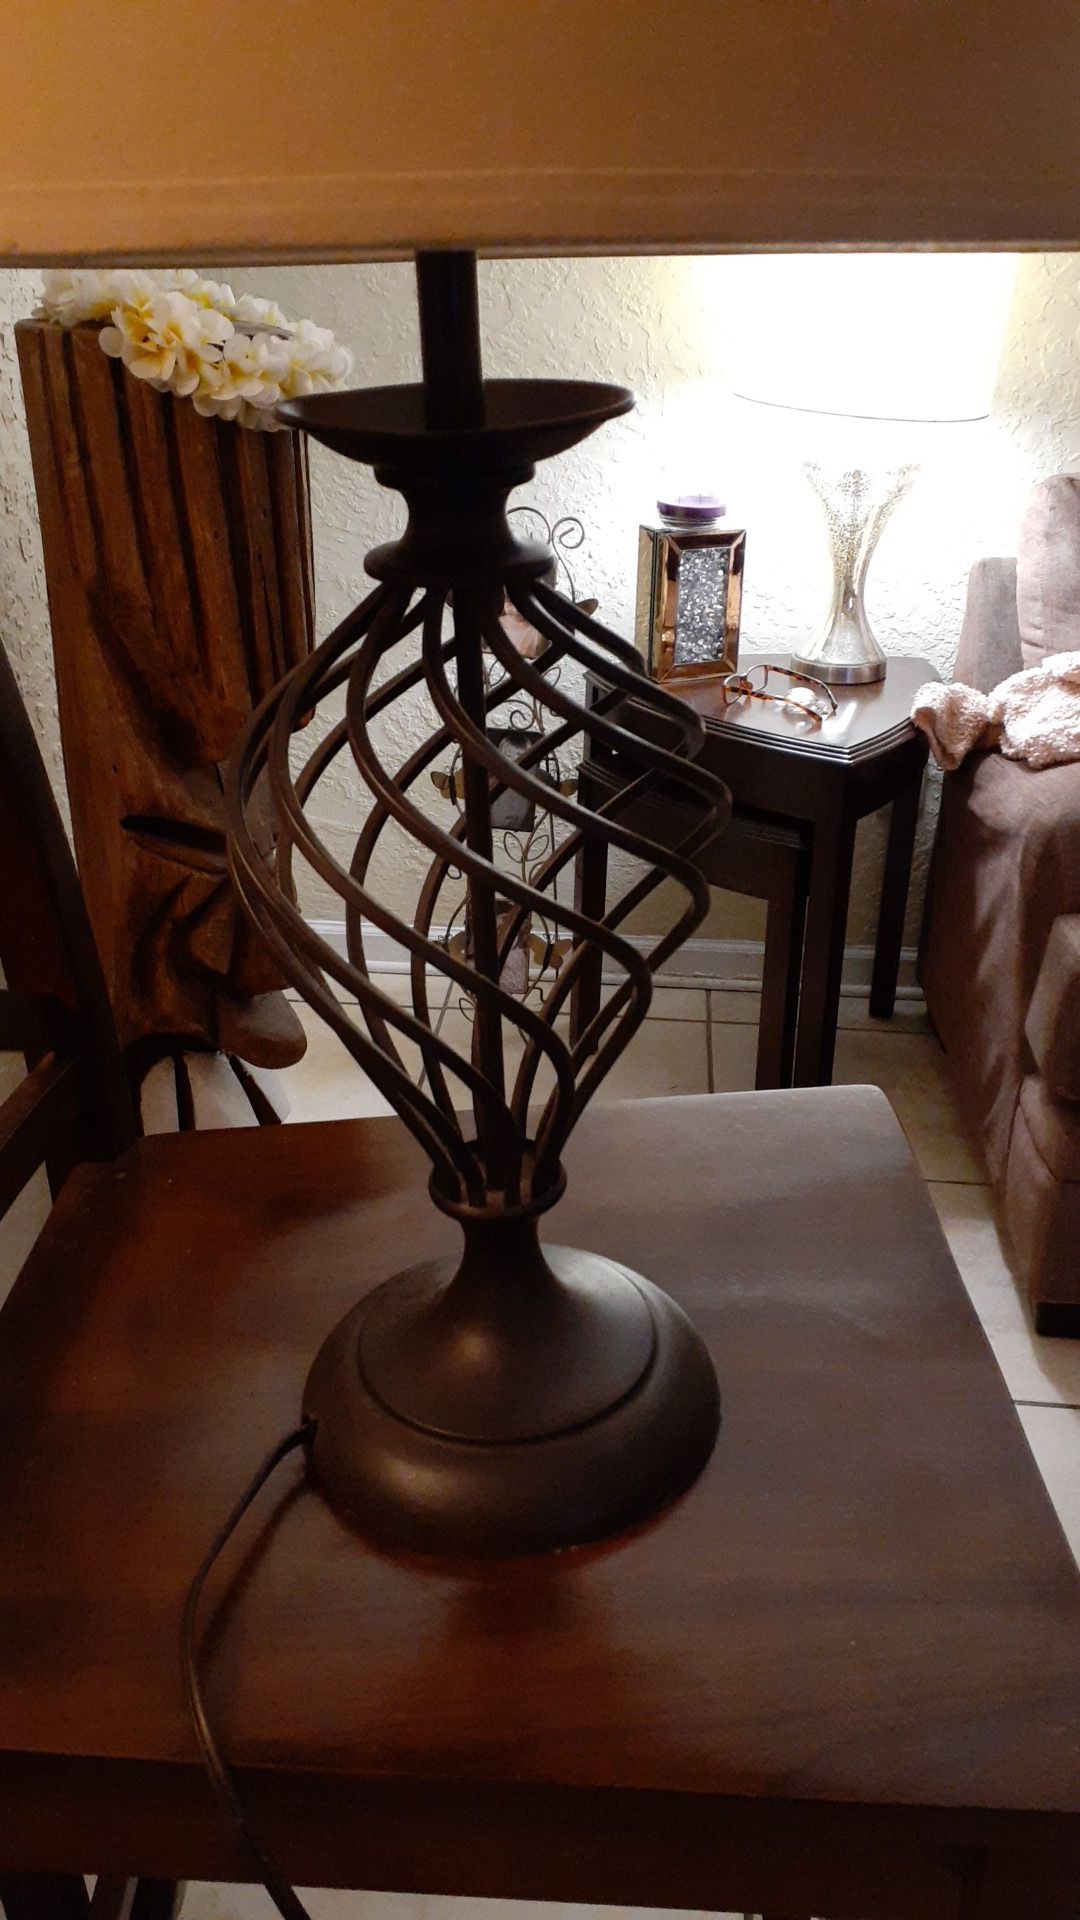 Lamp with lamp shade